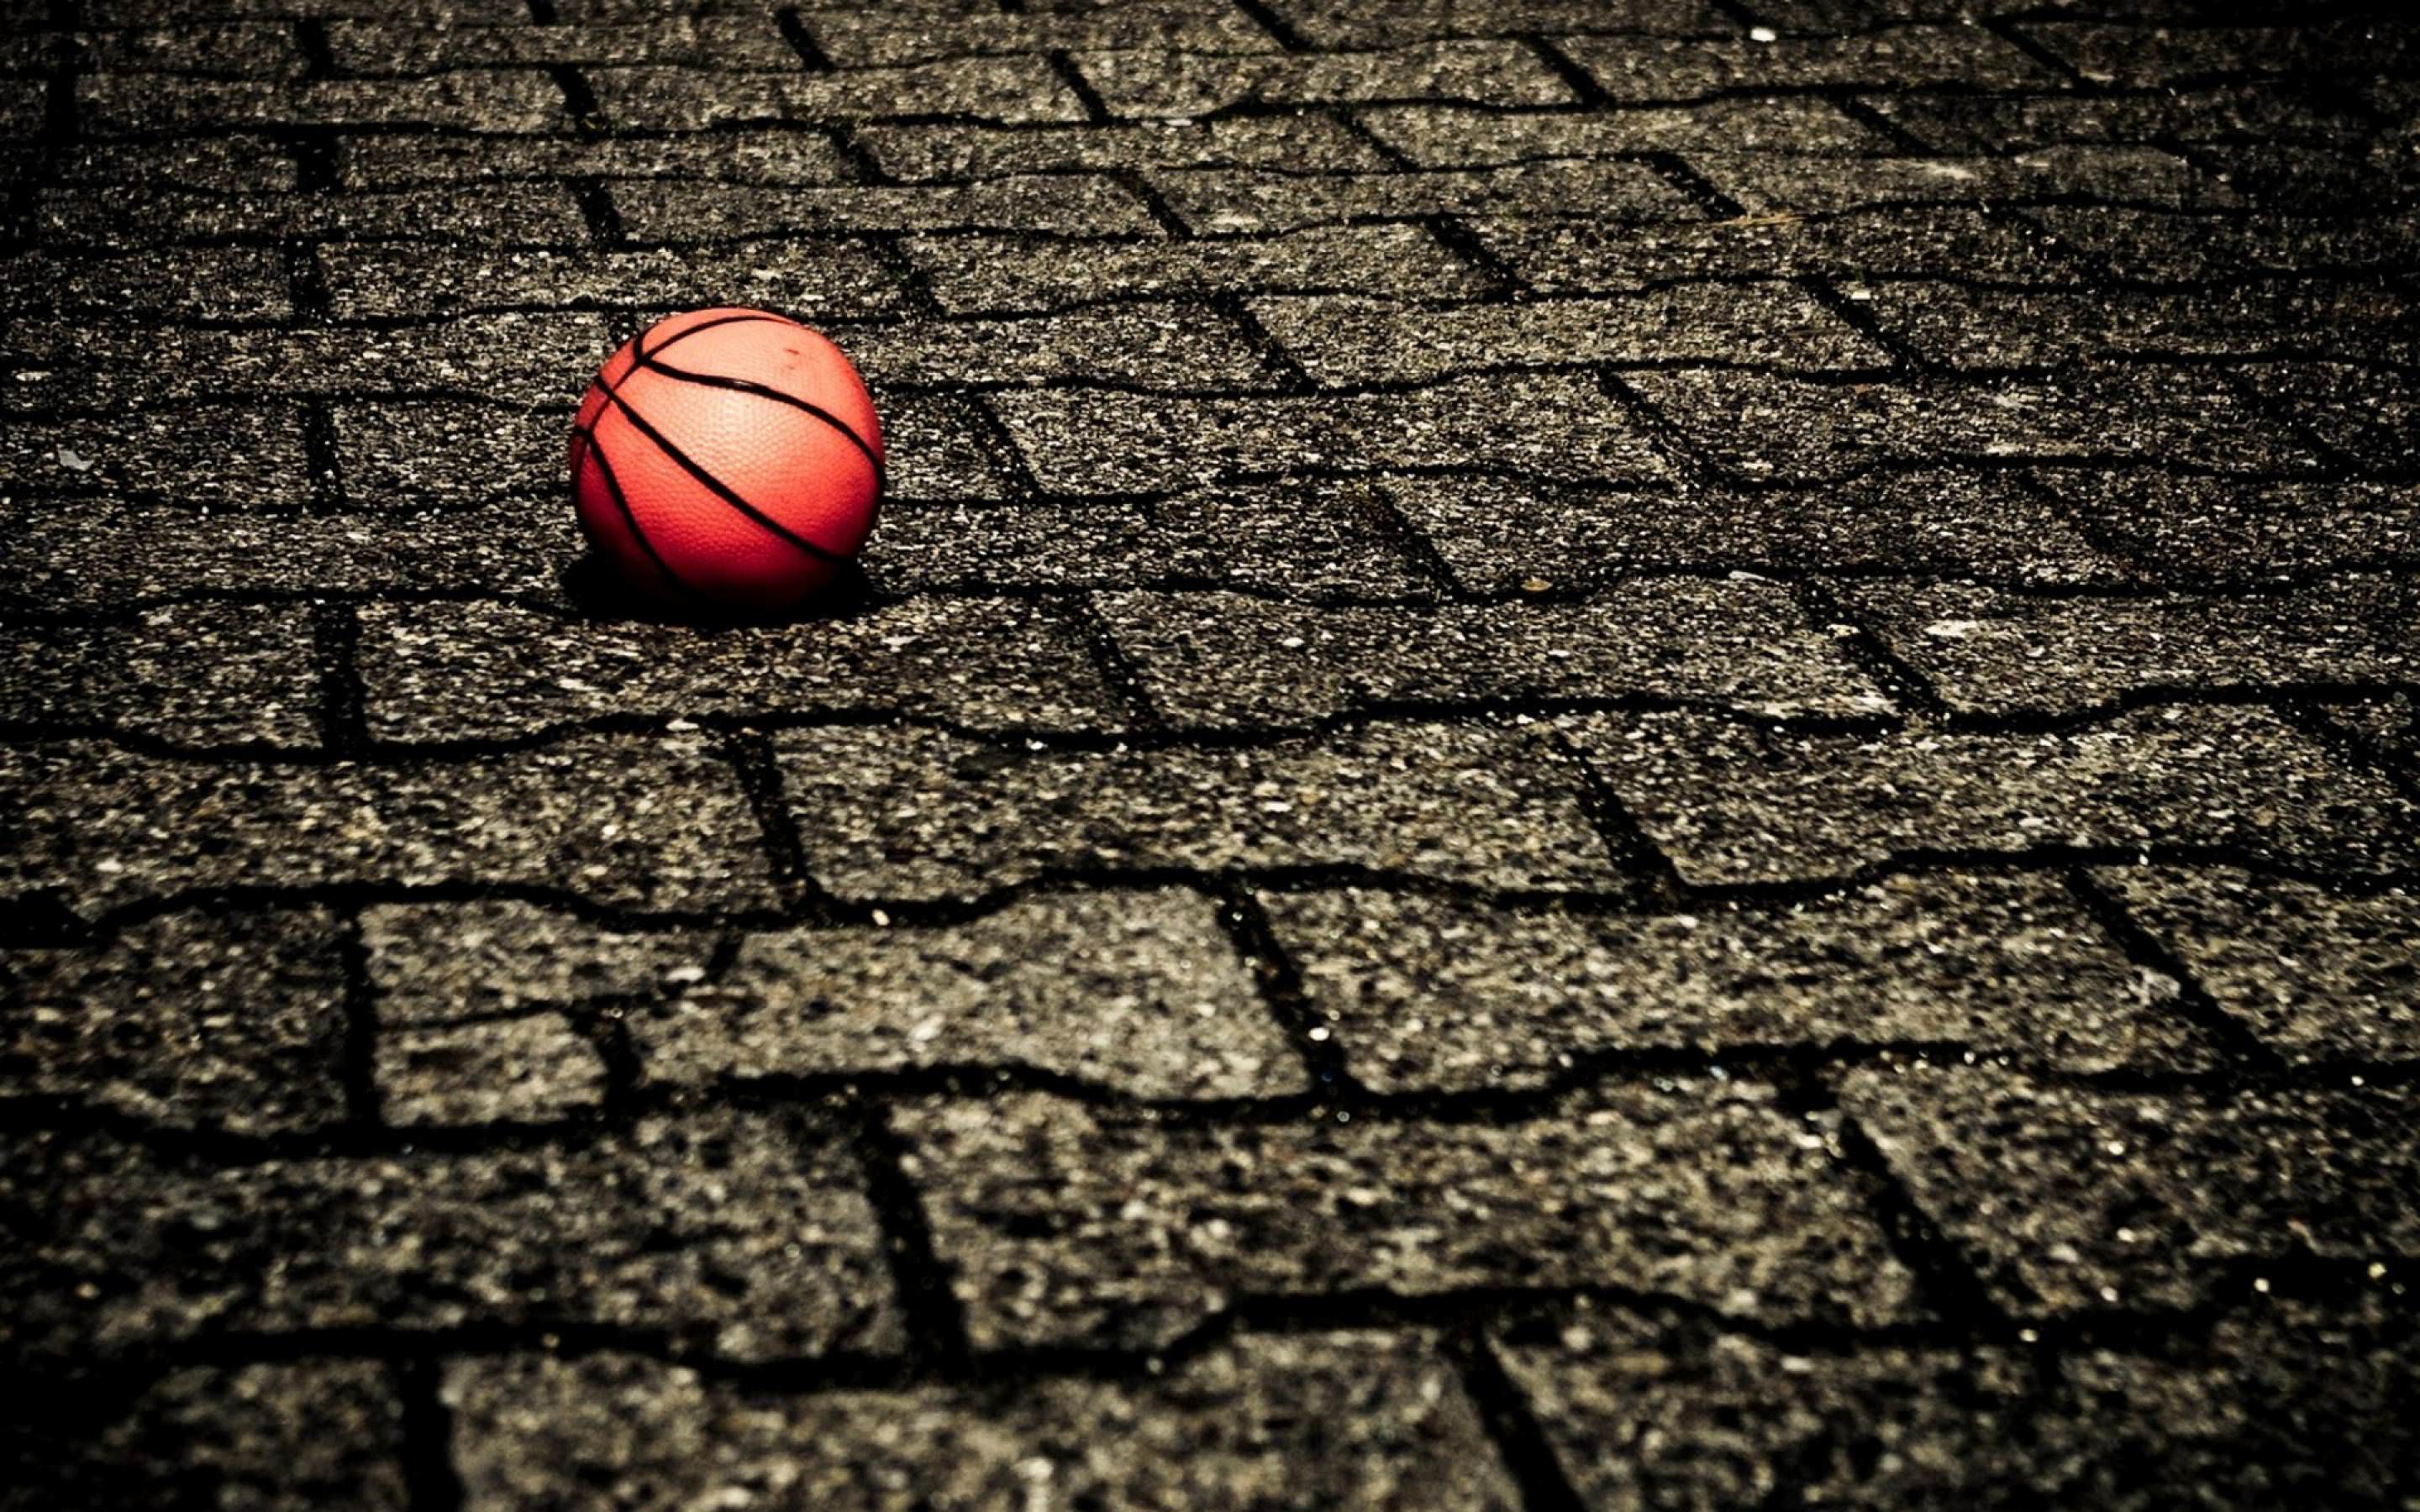 fonds d'écran de basket ball,rouge,pavé,sol,ballon de football,basketball